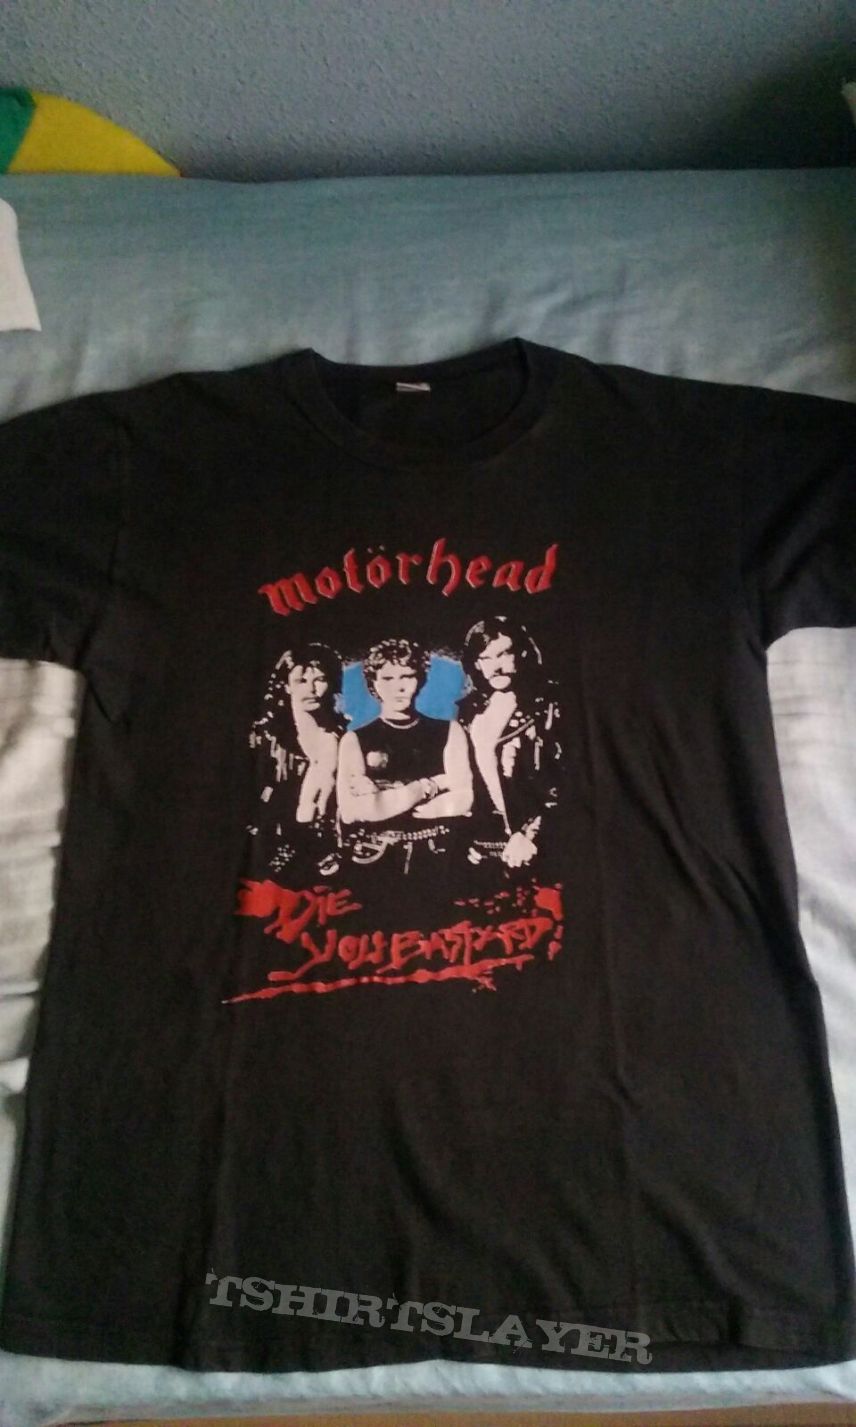 Motörhead Motoörhead - Die you bastard